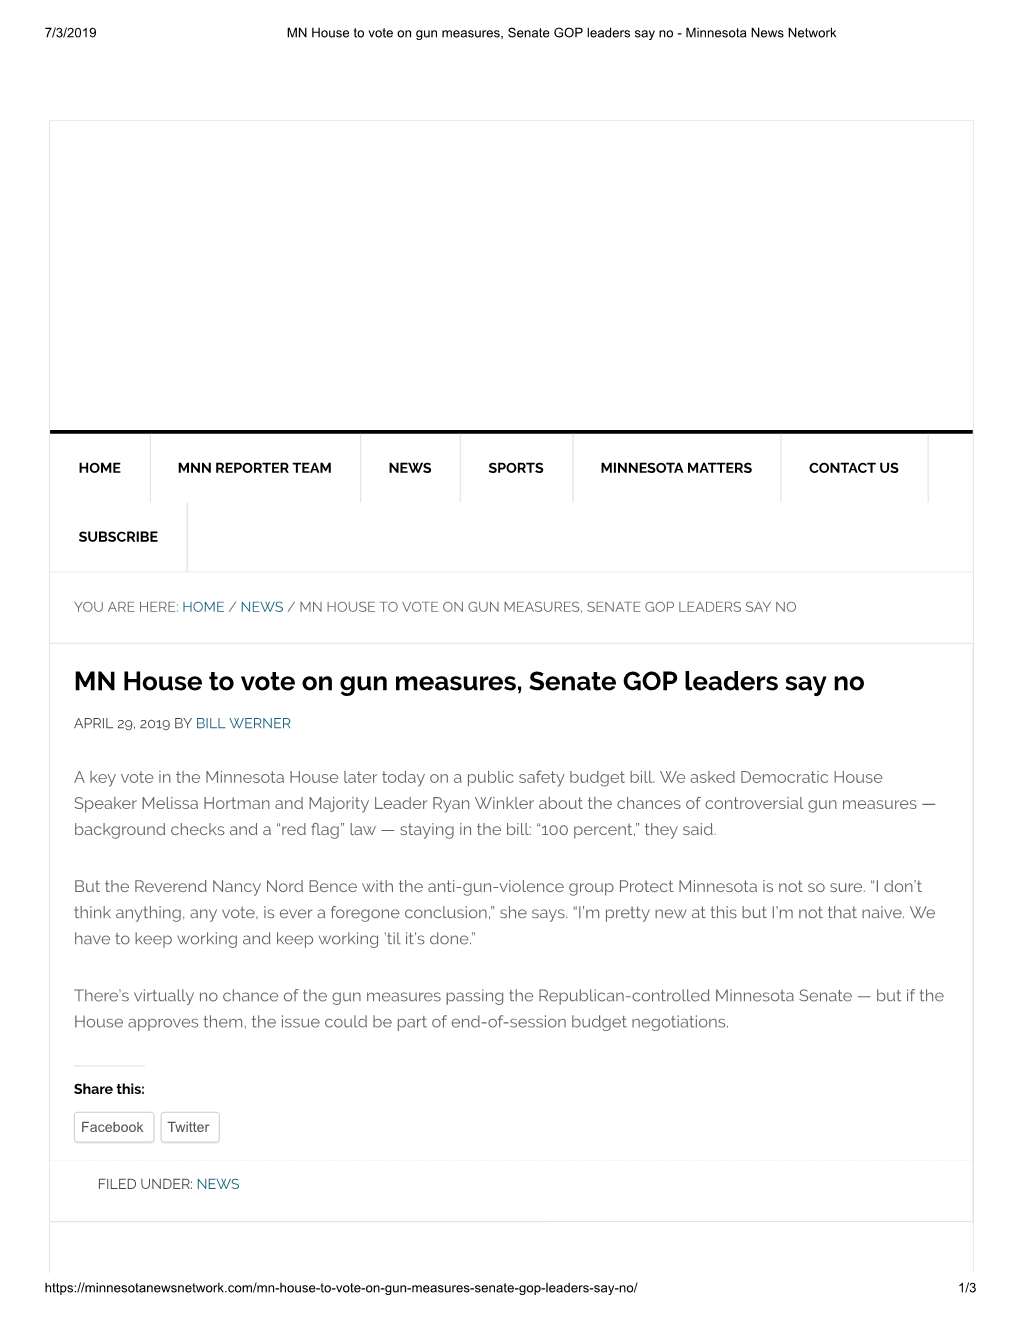 MN House to Vote on Gun Measures, Senate GOP Leaders Say No - Minnesota News Network